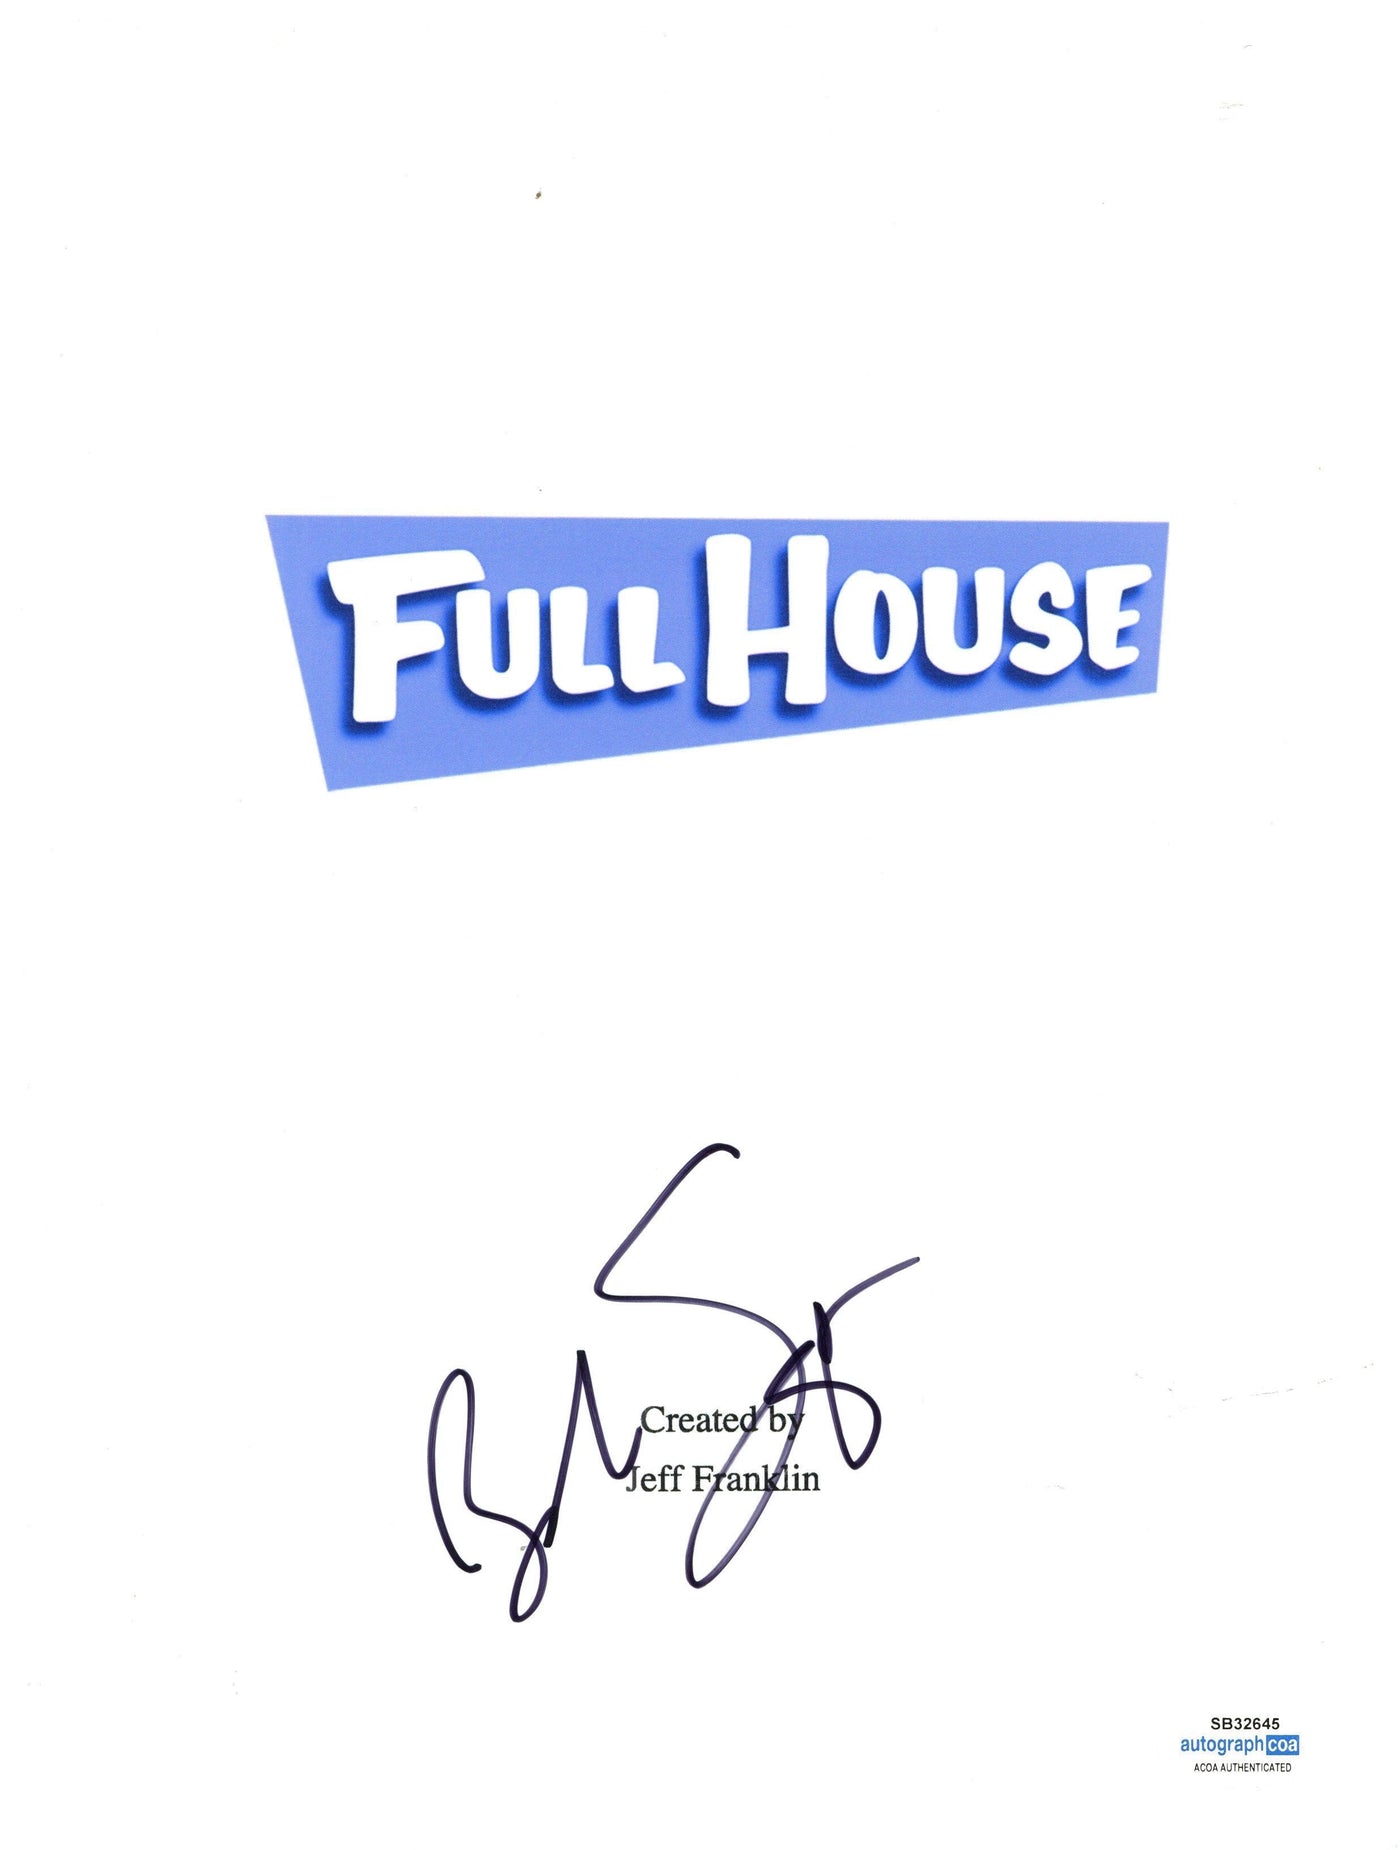 Bob Saget Signed Movie Script Cover Full House Autographed Autograph COA